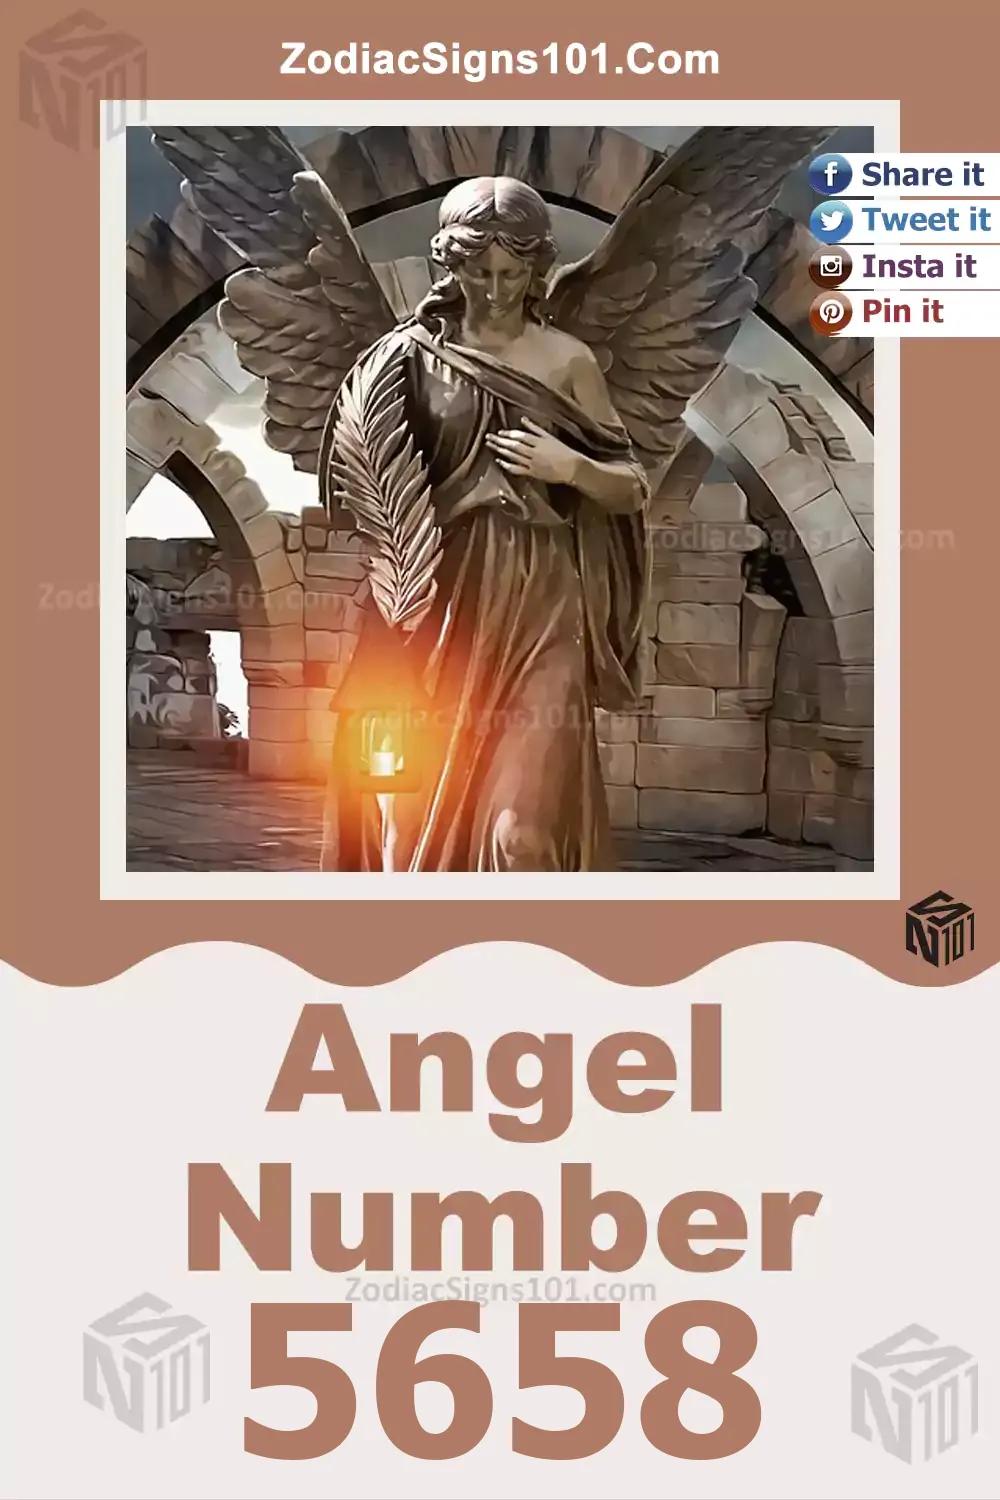 5658-Angel-Number-Meaning.jpg